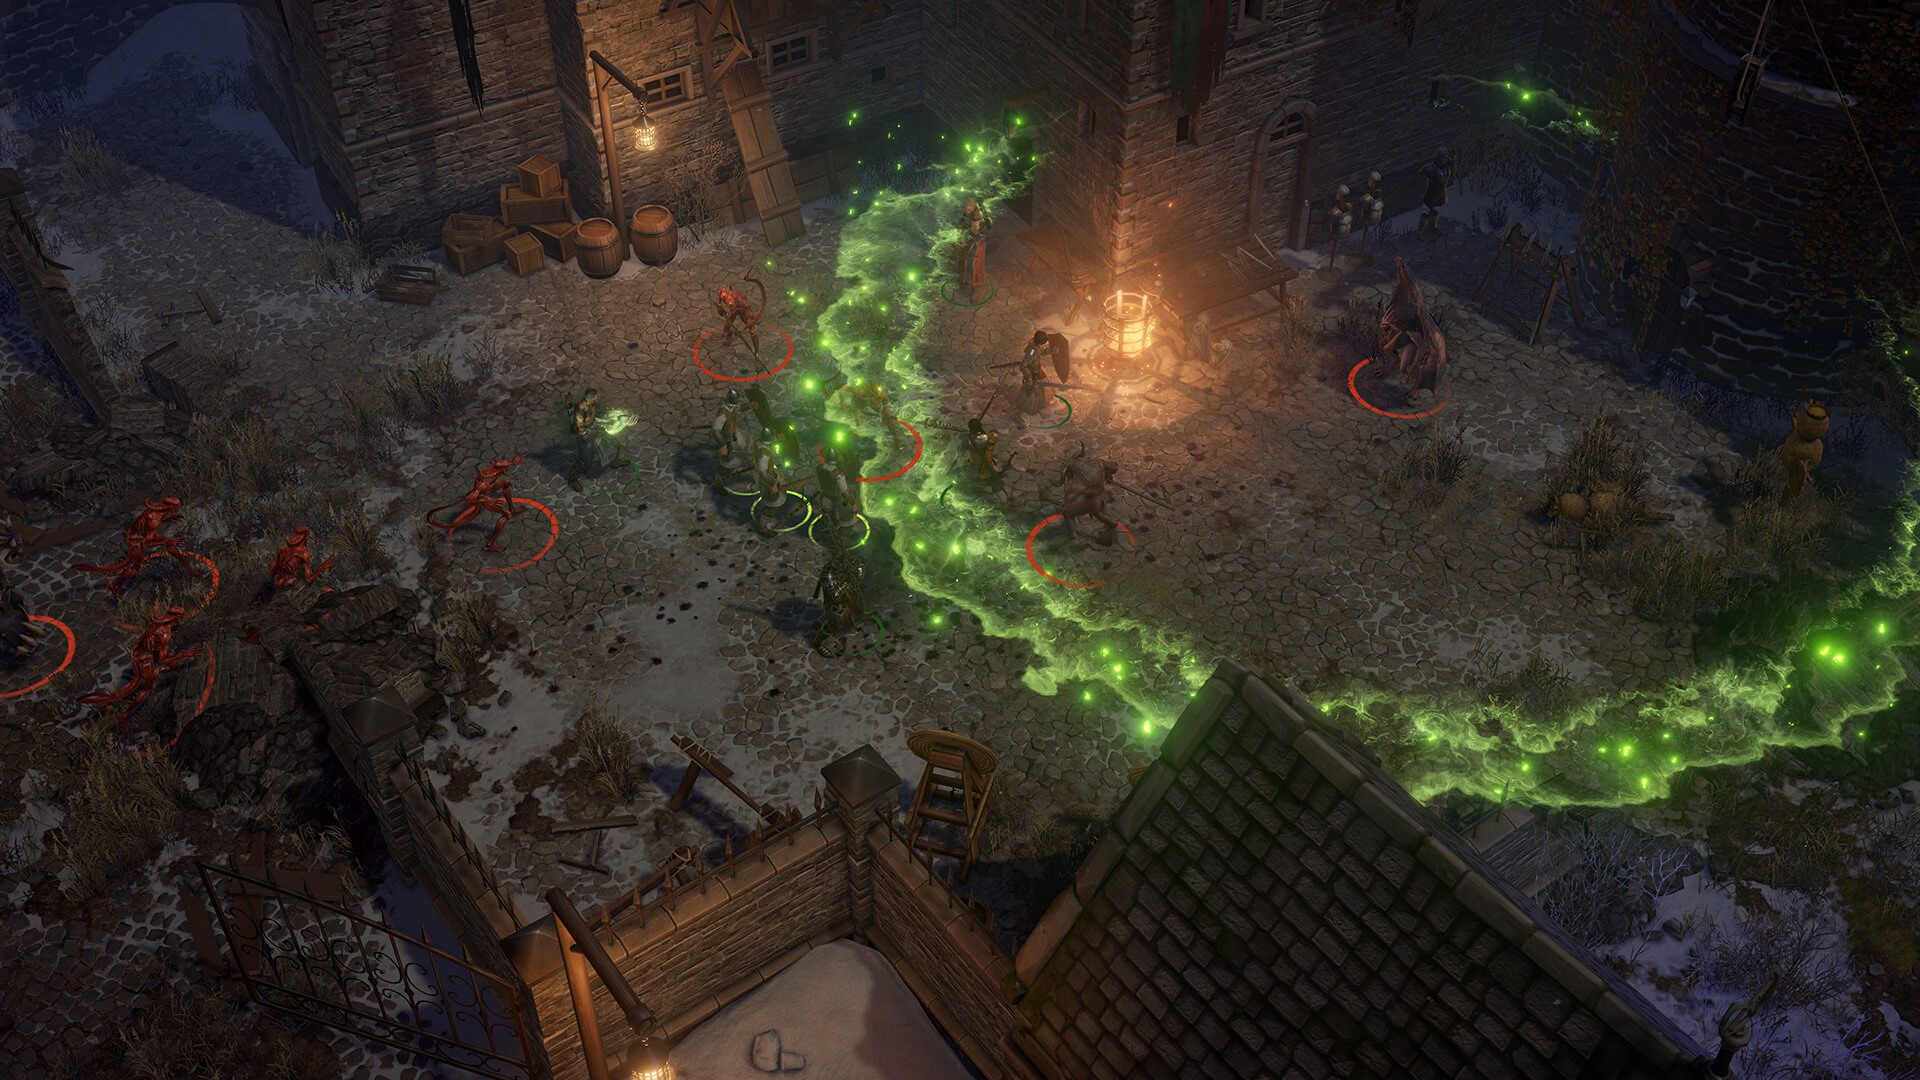 Pathfinder: Wrath of the Righteous Kickstarter has raised $2 million, new gameplay details